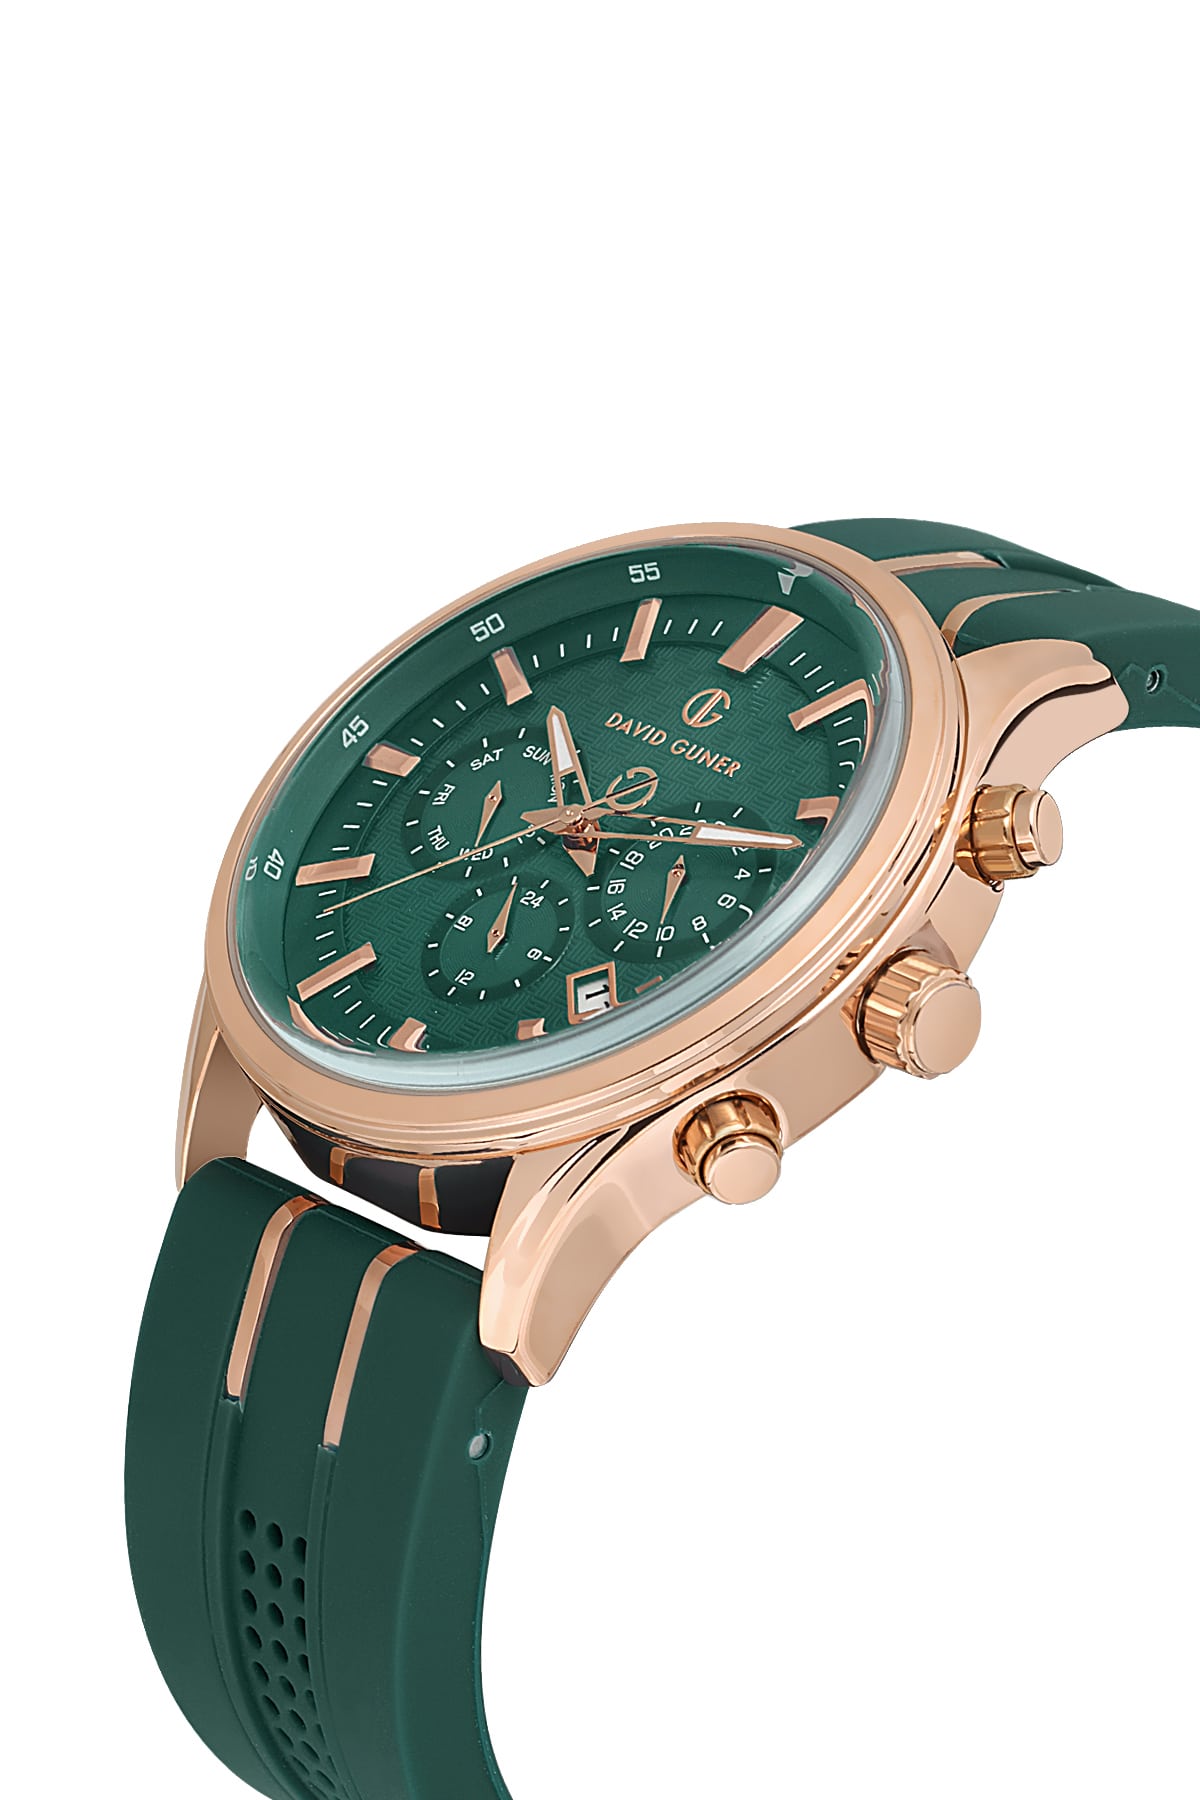 DAVID GUNER Green Dial Men's Wristwatch with Silicone Strap